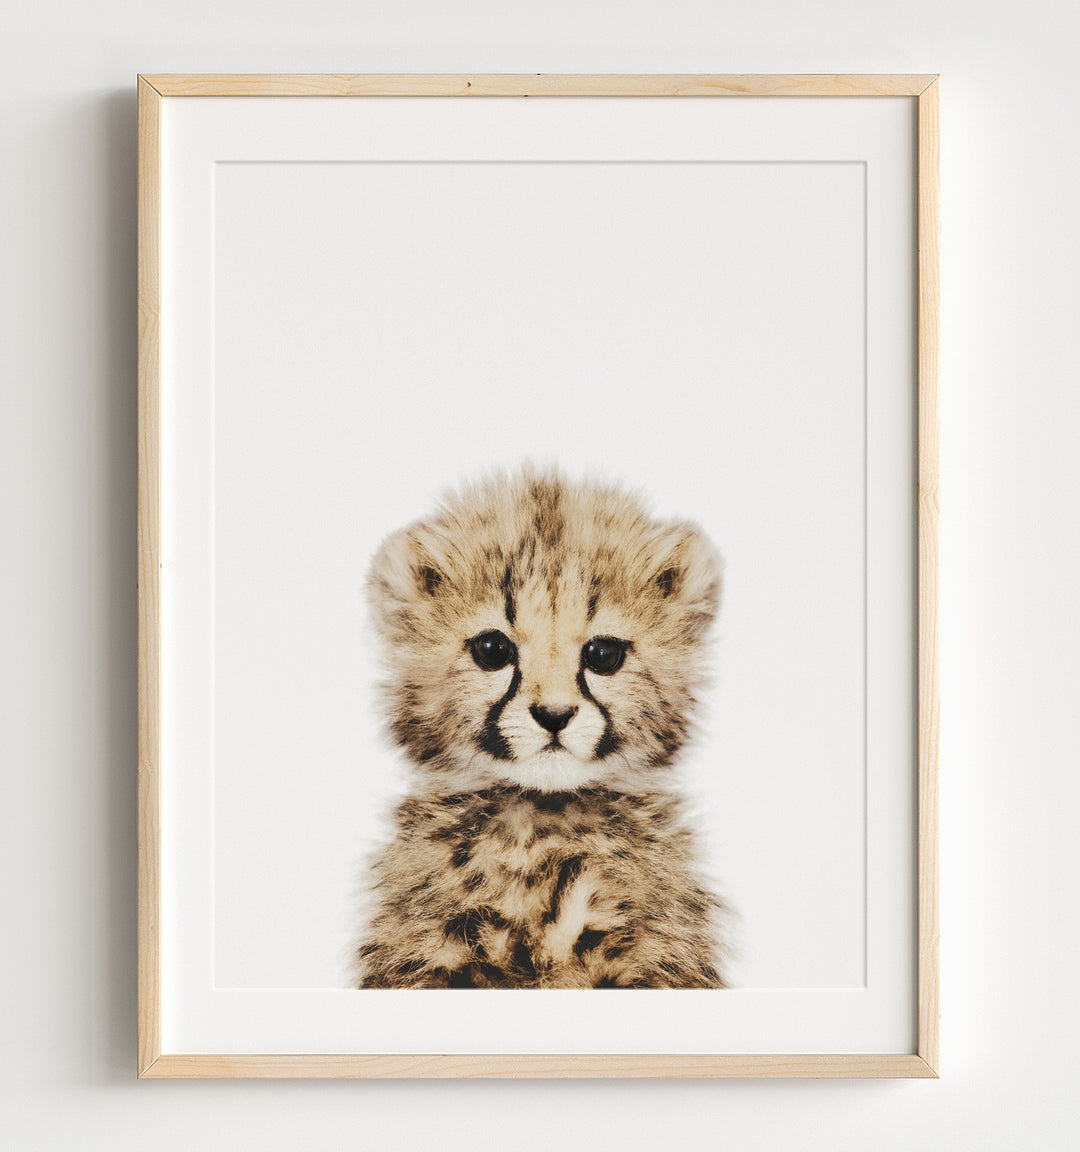 Baby Cheetah Poster Print by The Crown Prints - Safari Nursery Decor artwork